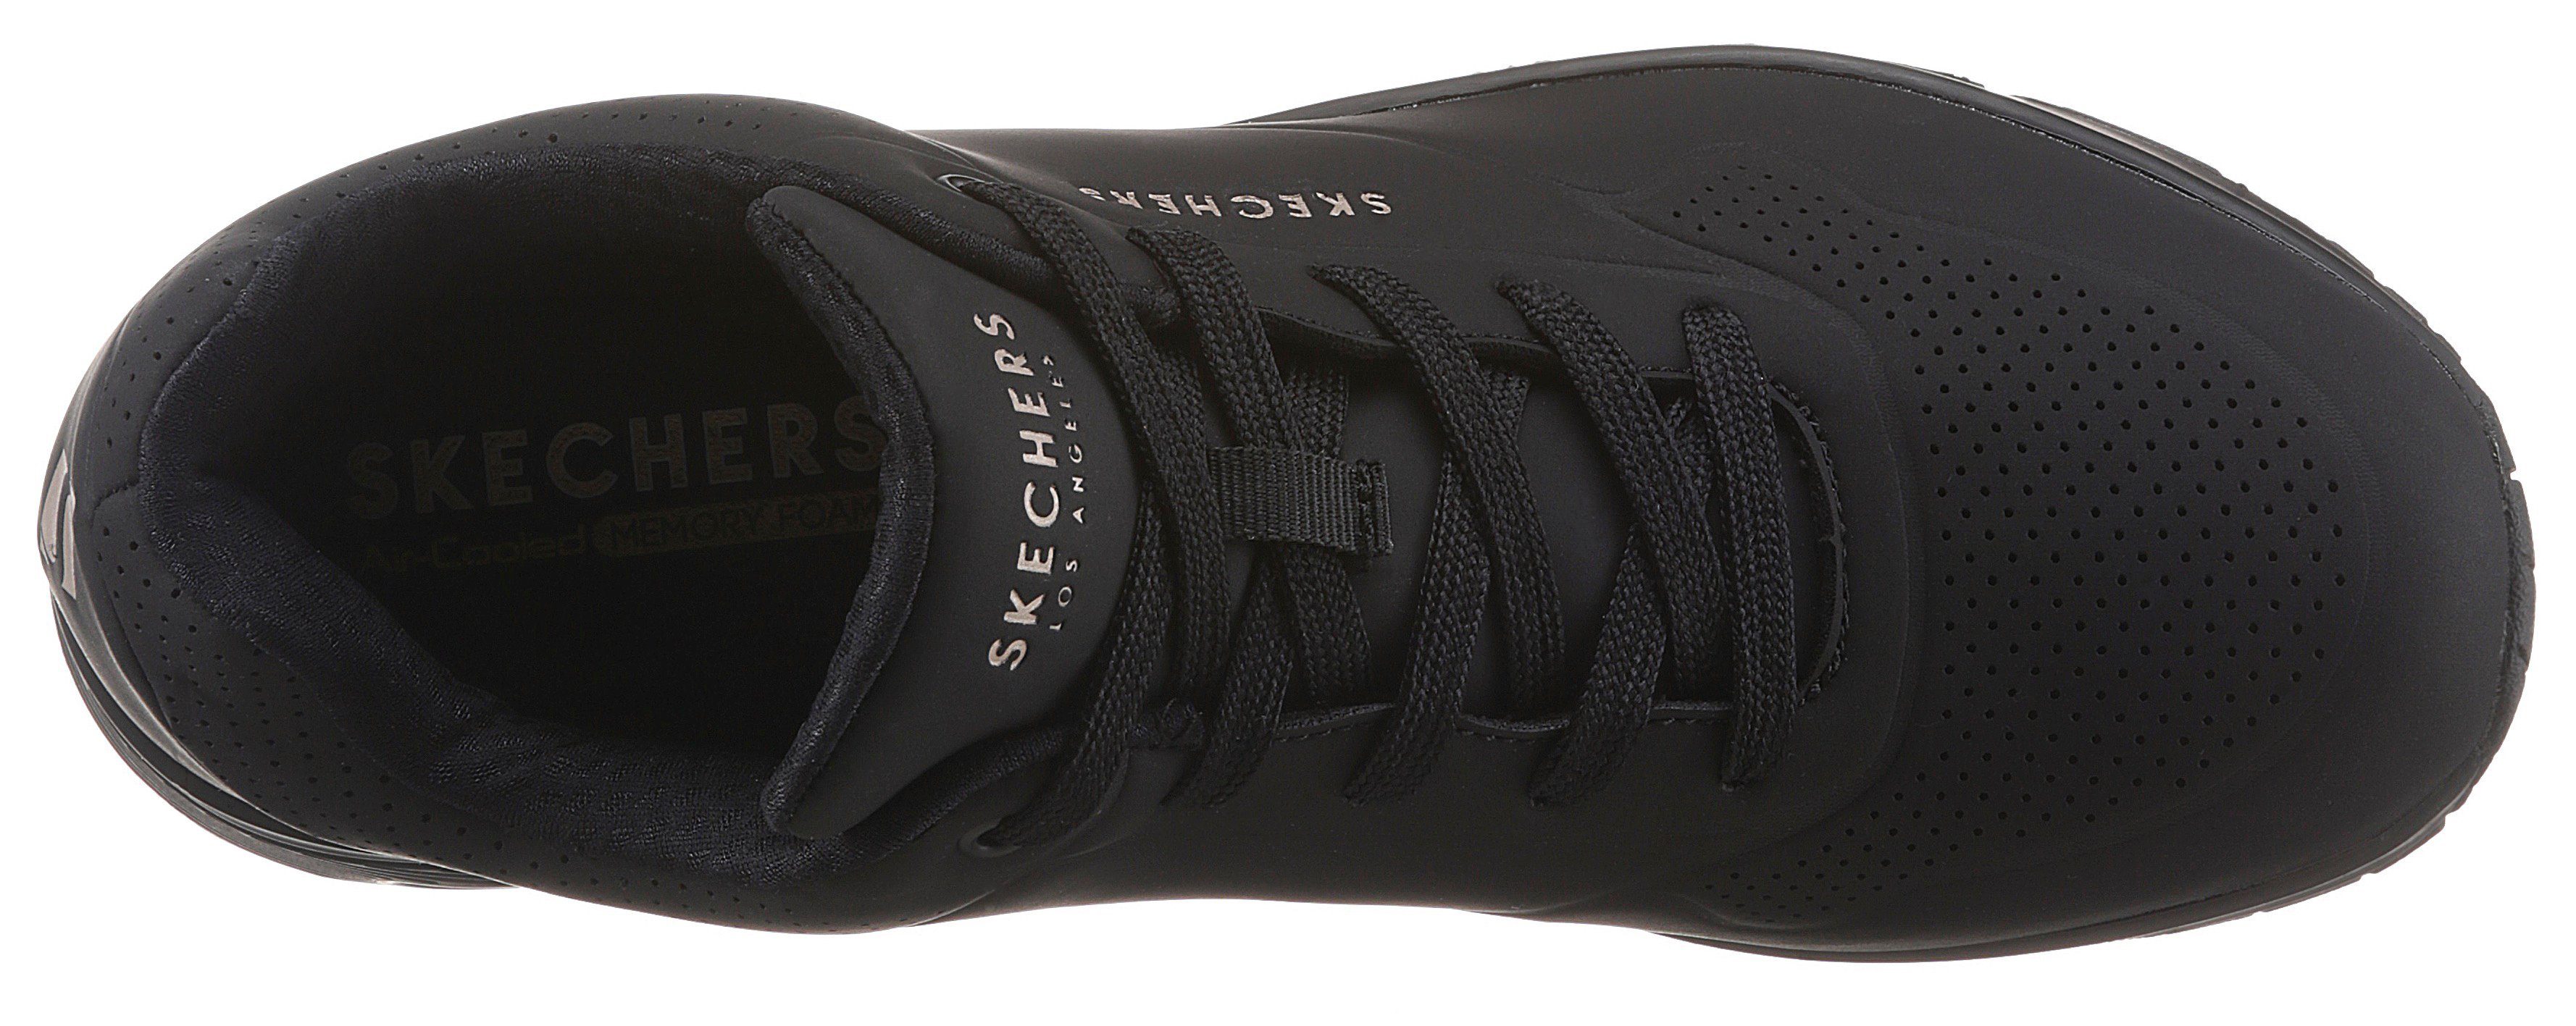 Wedgesneaker on Uno black Stand feiner Skechers Perforation mit Air -